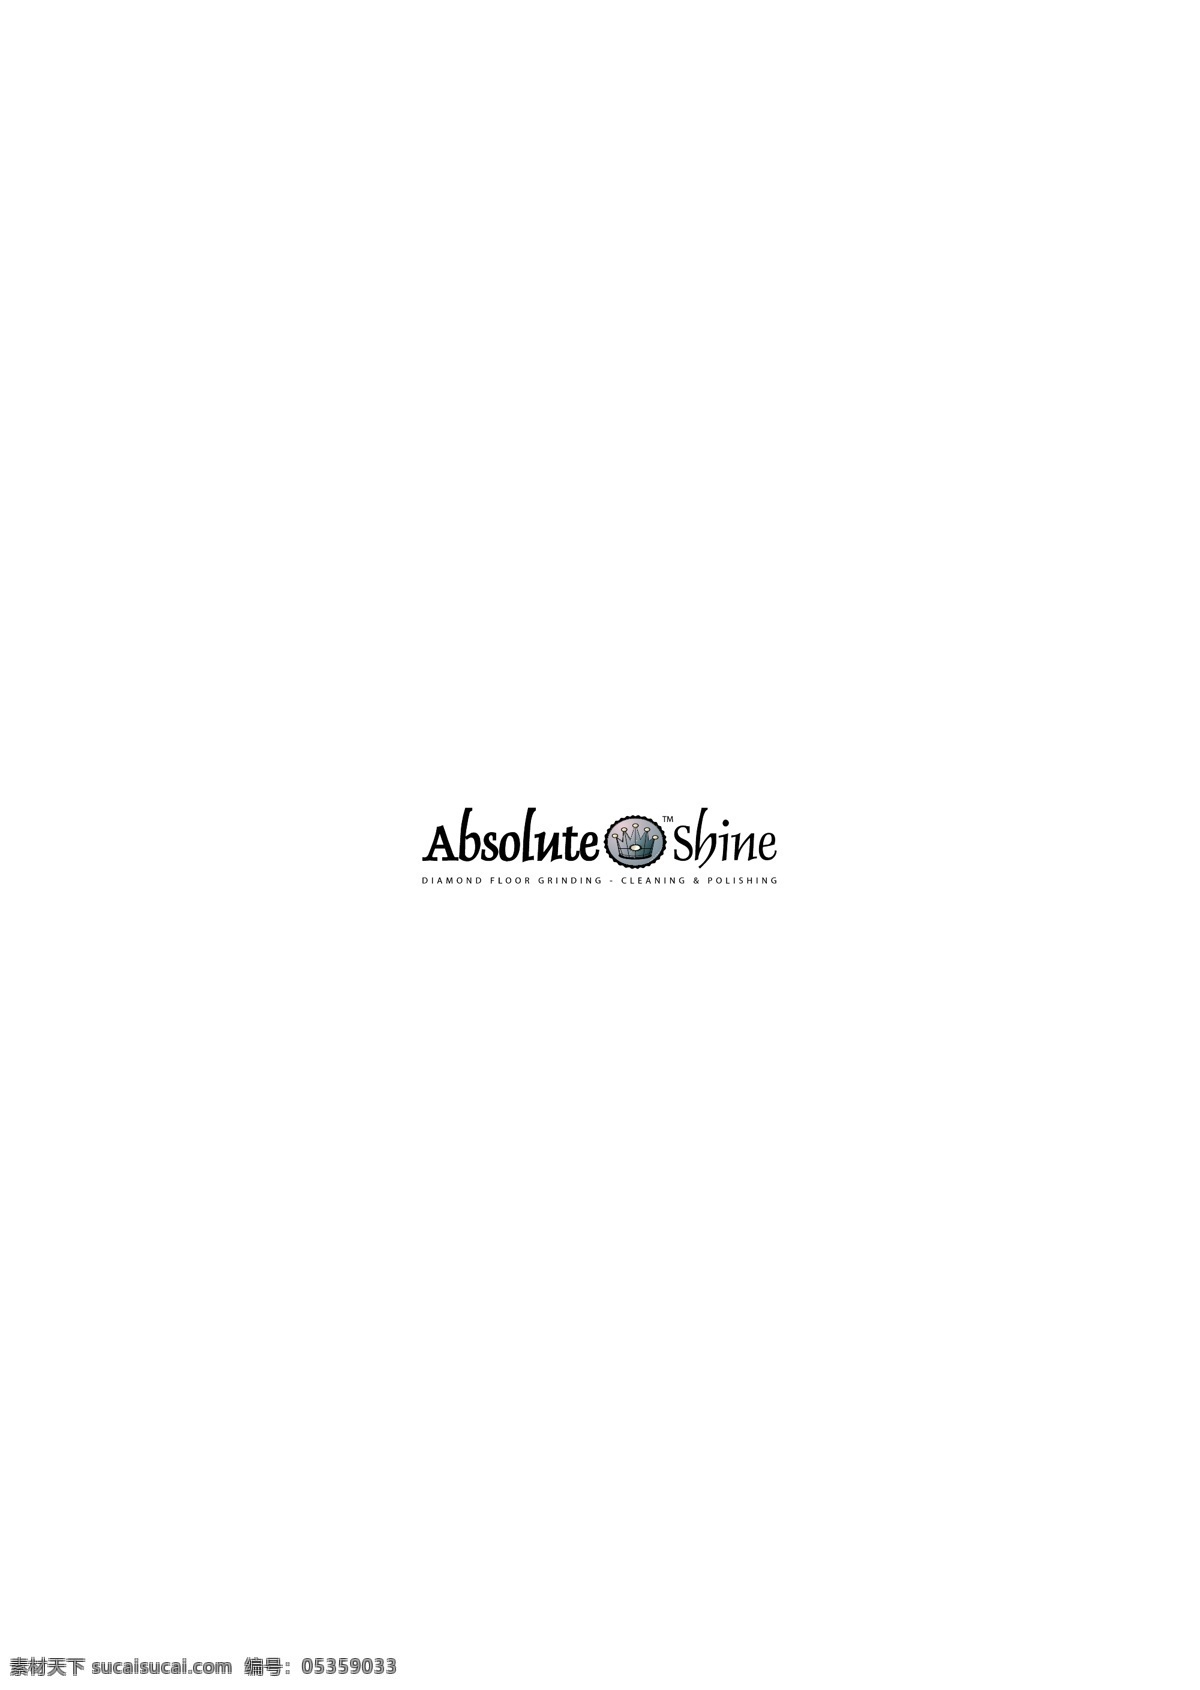 absoluteshine logo 设计欣赏 服务 行业 标志 标志设计 欣赏 矢量下载 网页矢量 商业矢量 logo大全 红色